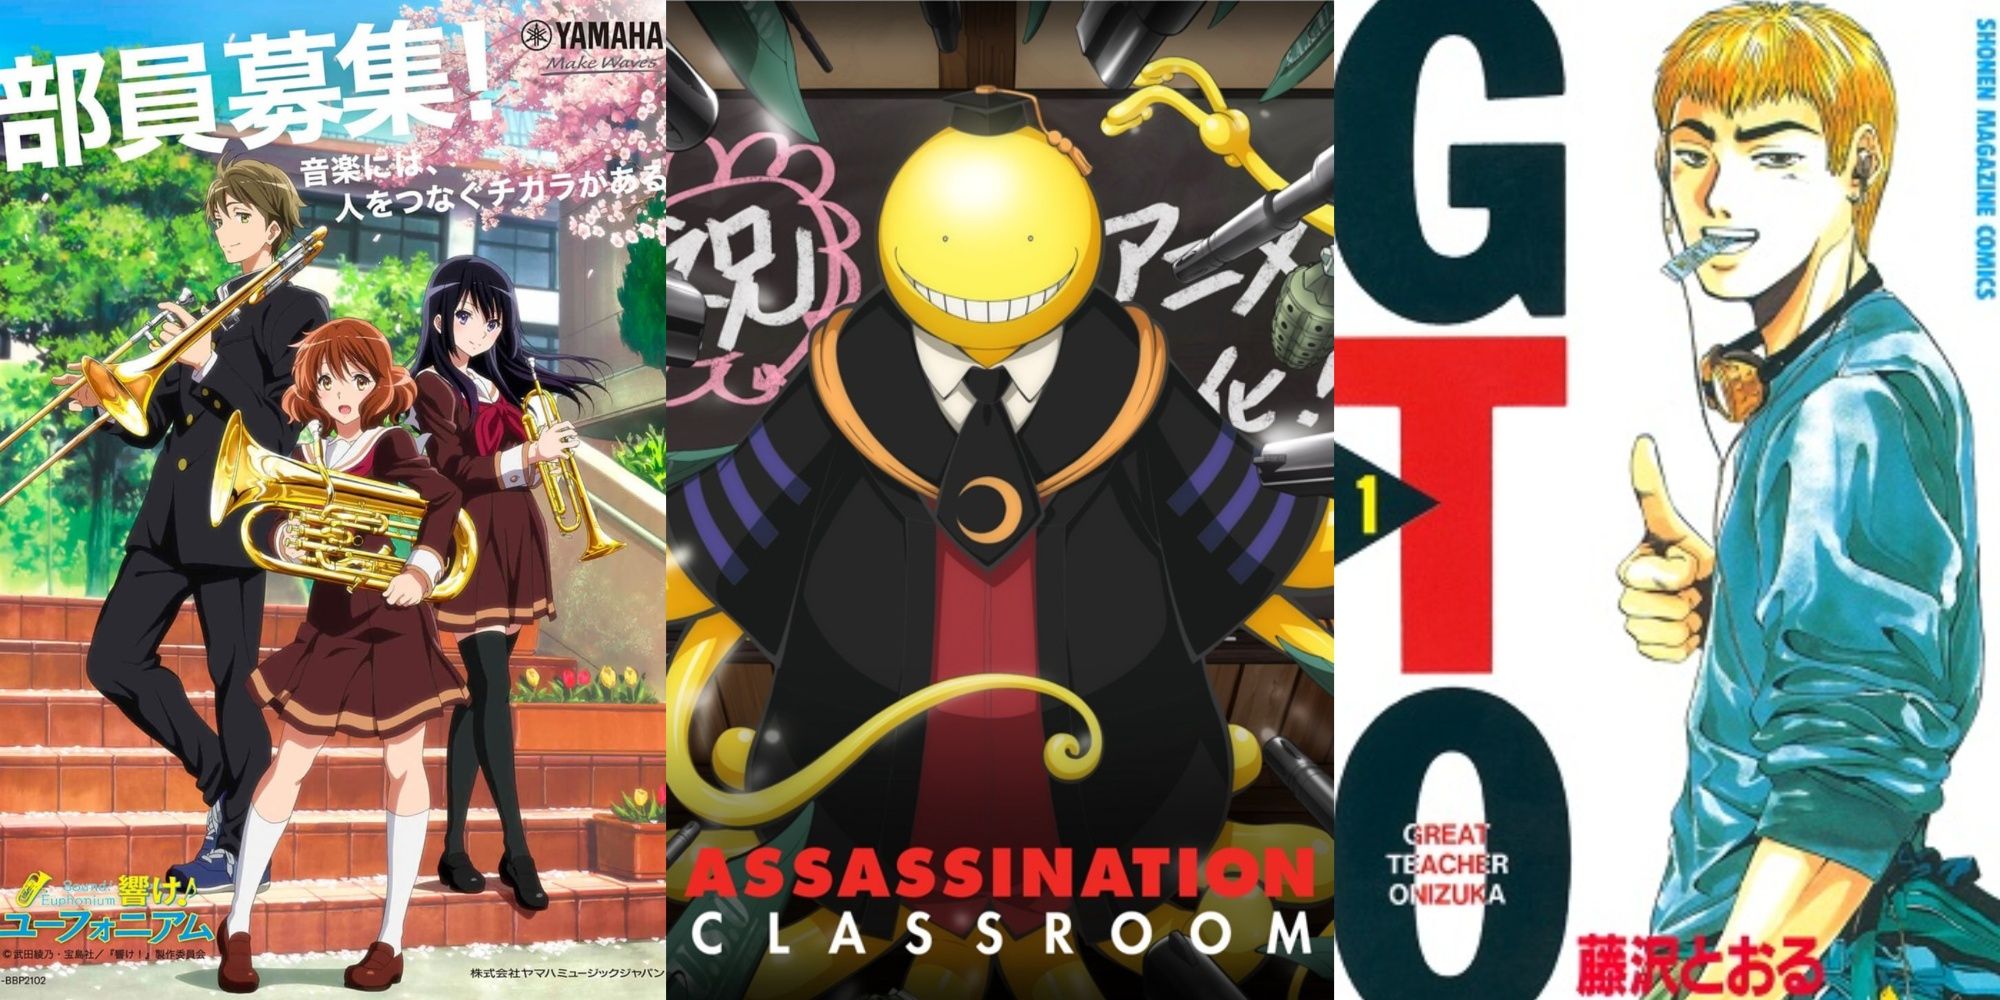 Hibike Euphonium, Assassination Classroom and Great Teacher Onizuka 